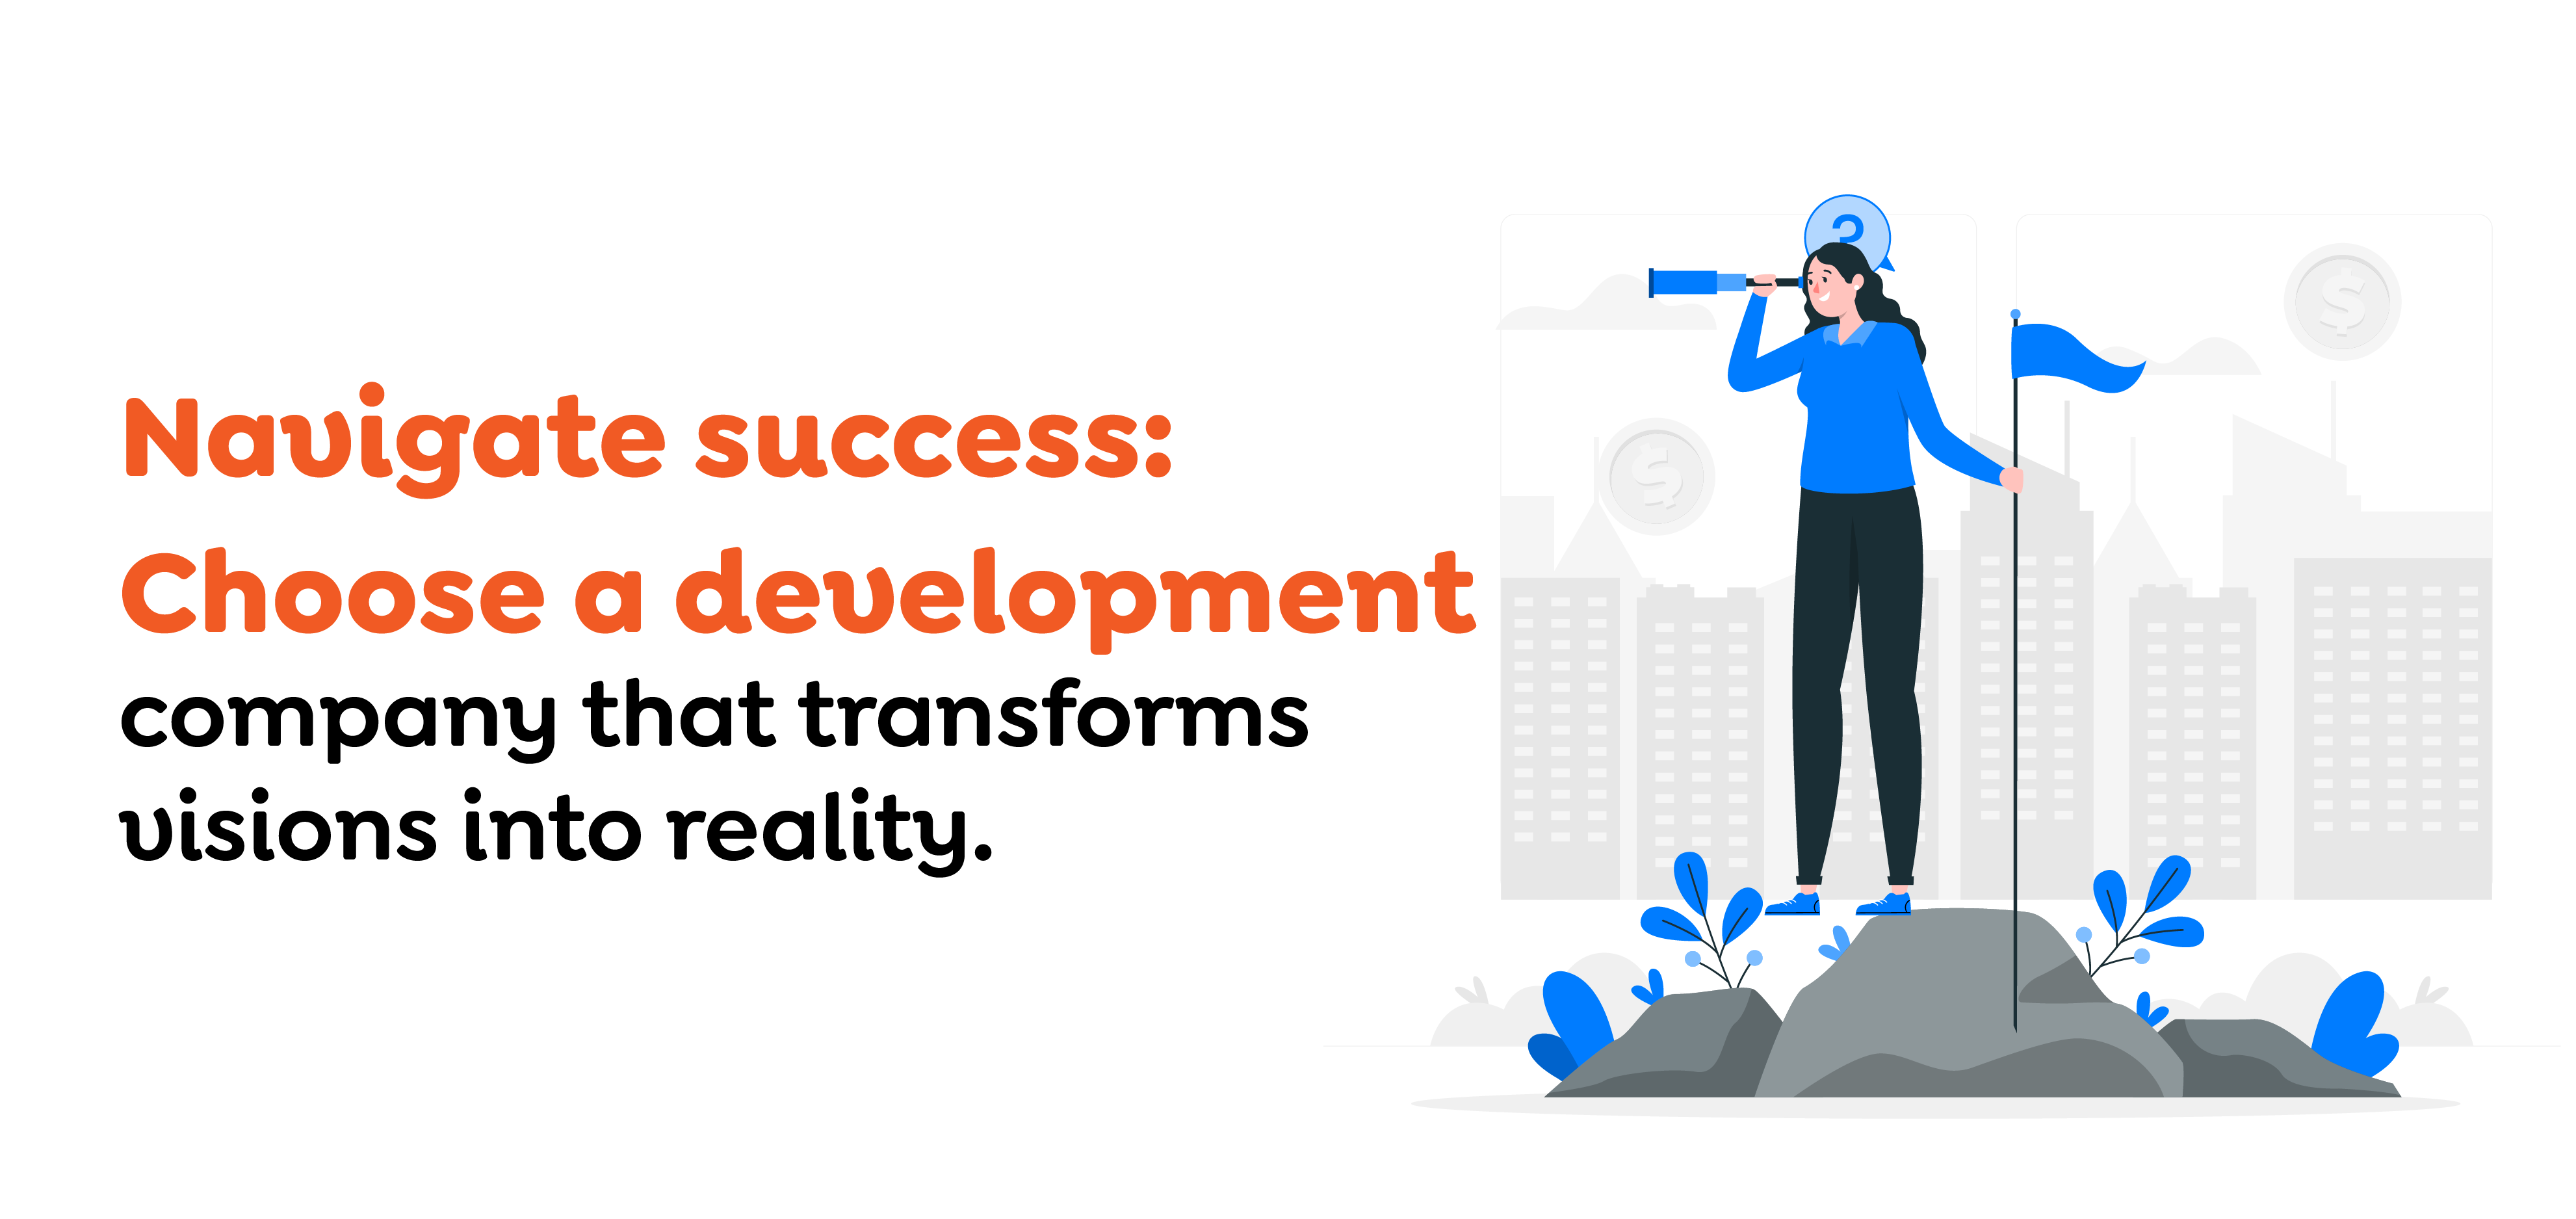 Choose a development company that transforms